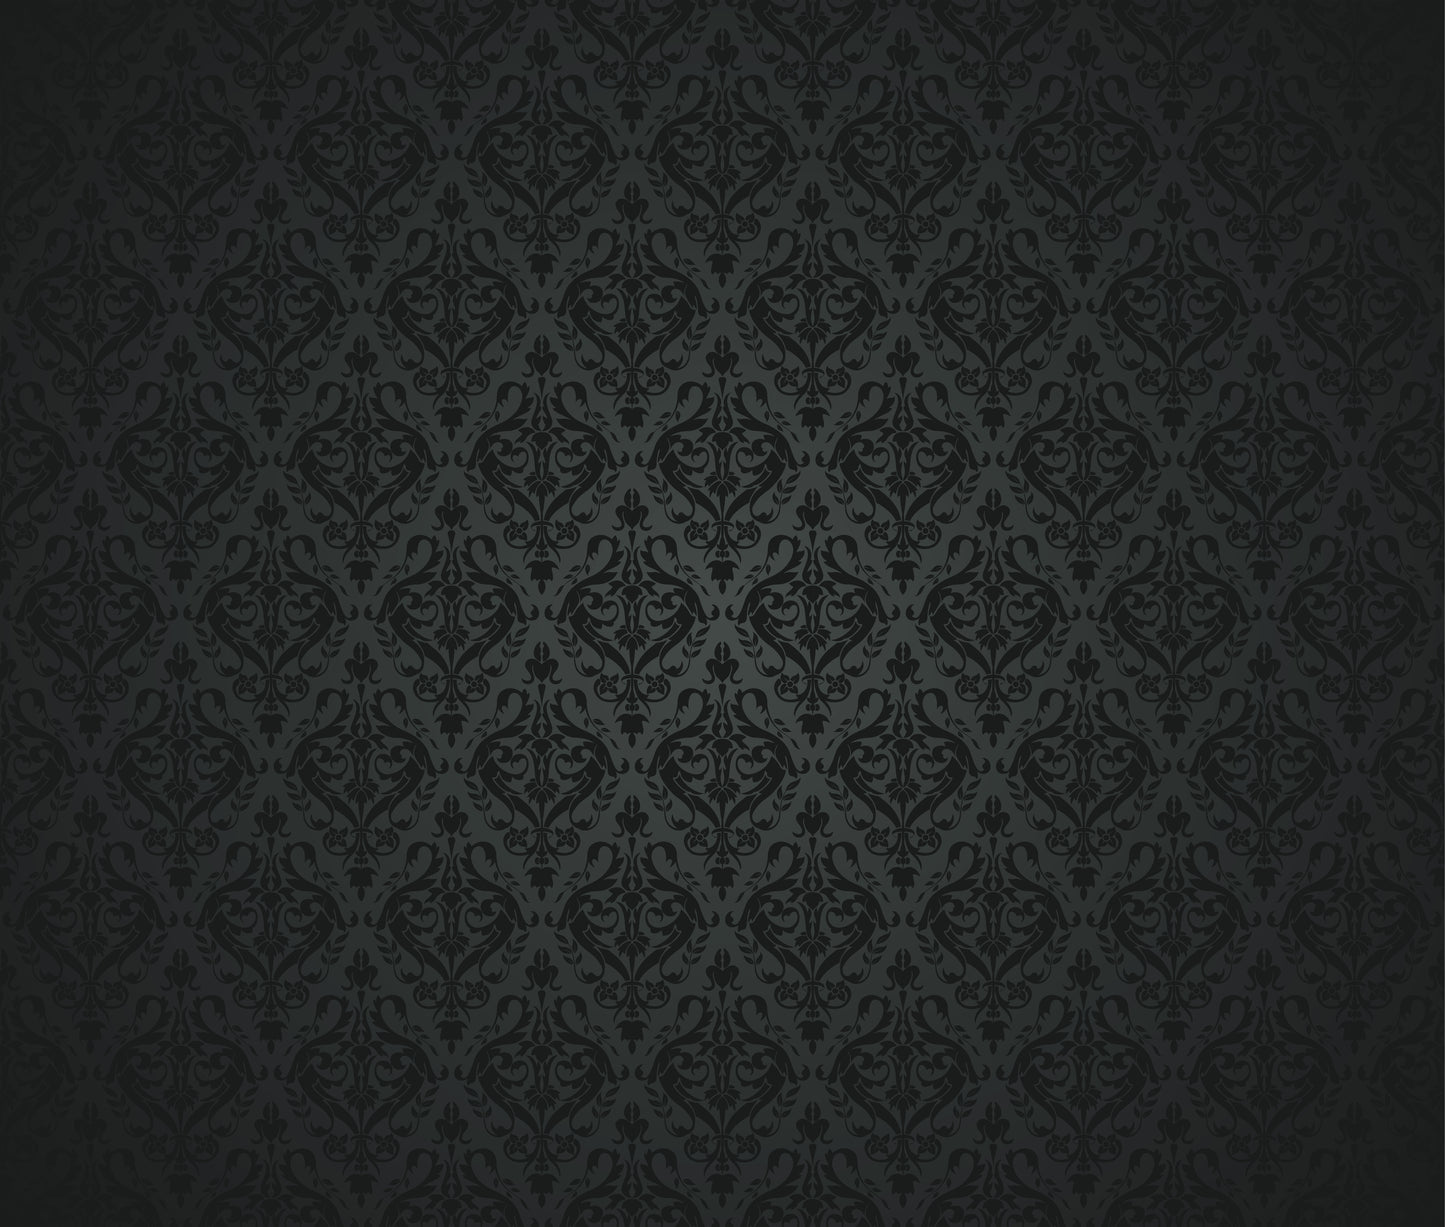 Premium Black designer wallpaper for wall